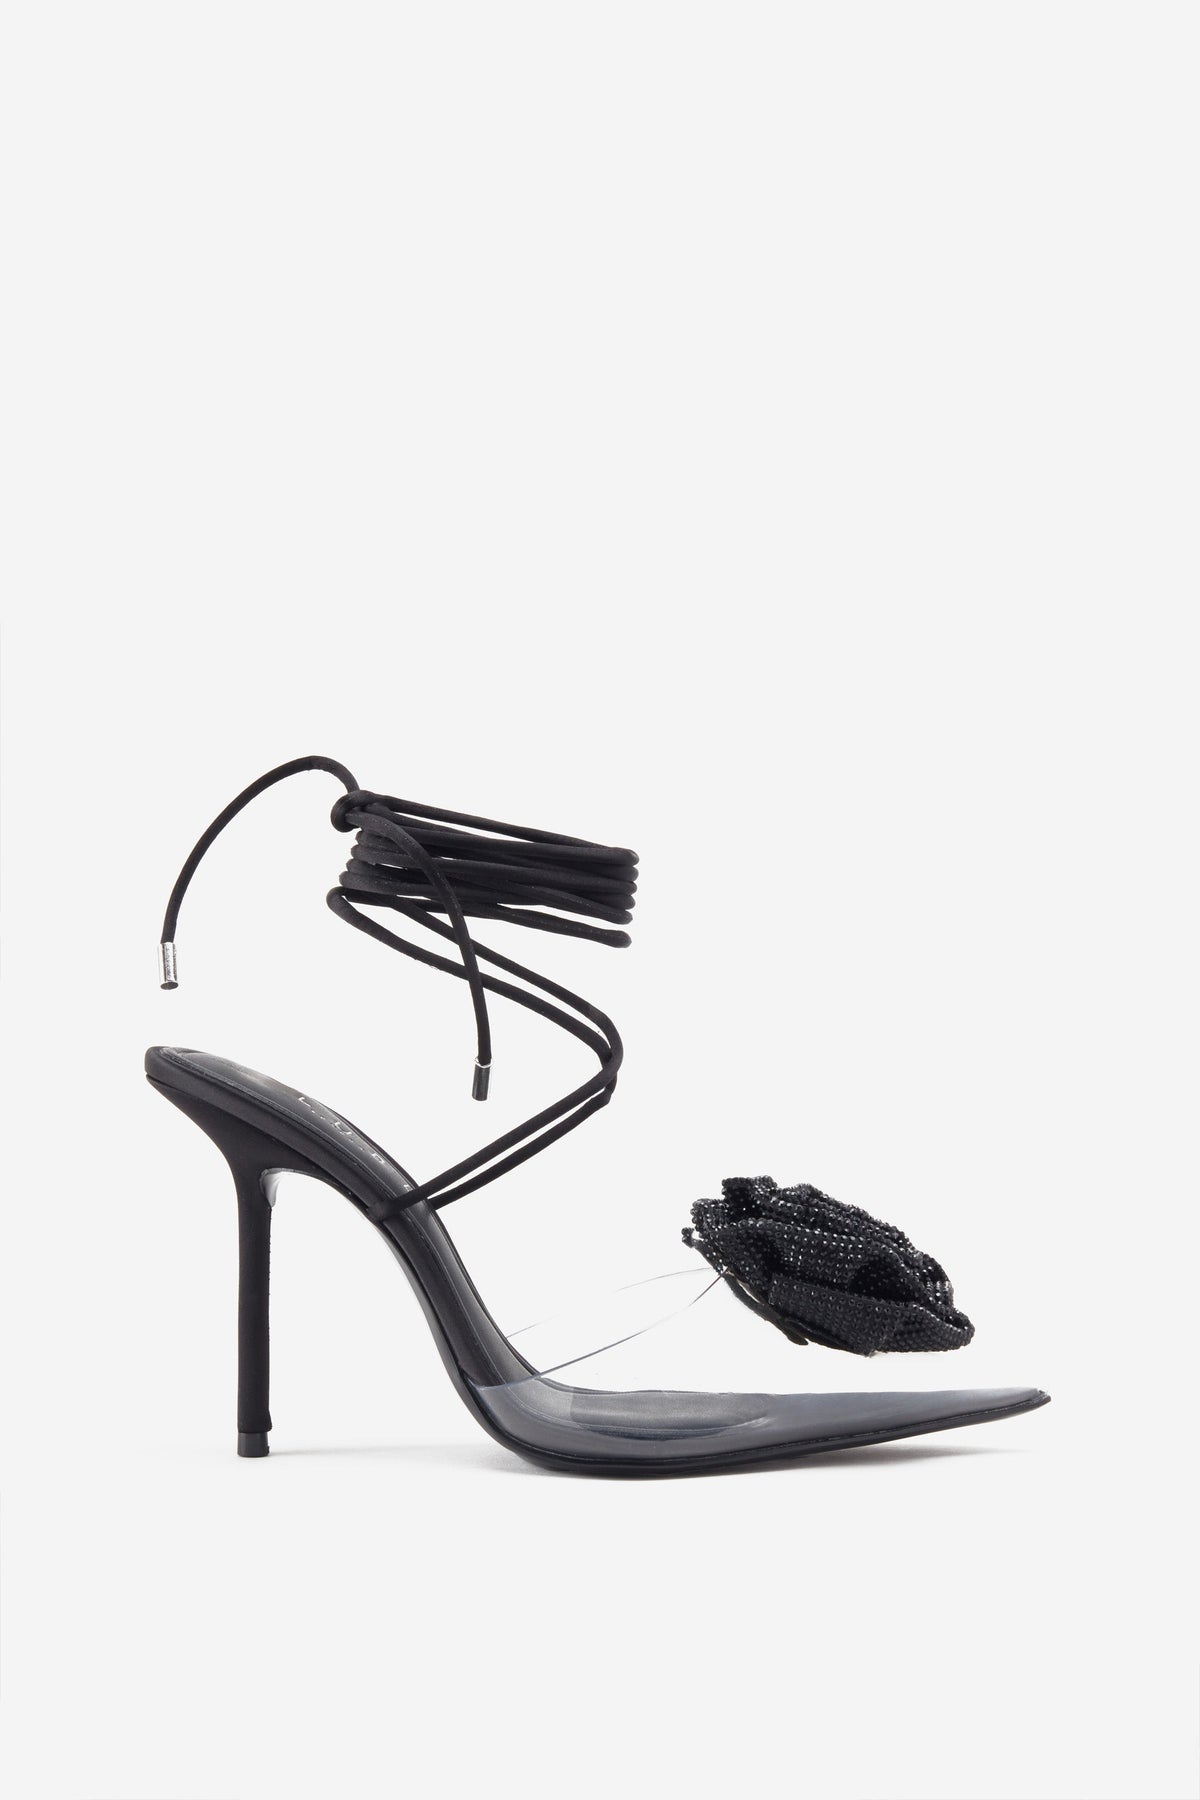 Amazon.com | Kino London Womens High Heel Platform Sandals Ladies Orange  Strappy Ankle Strap Perspex Toe Shoes Size 5 B(M) US | Heeled Sandals